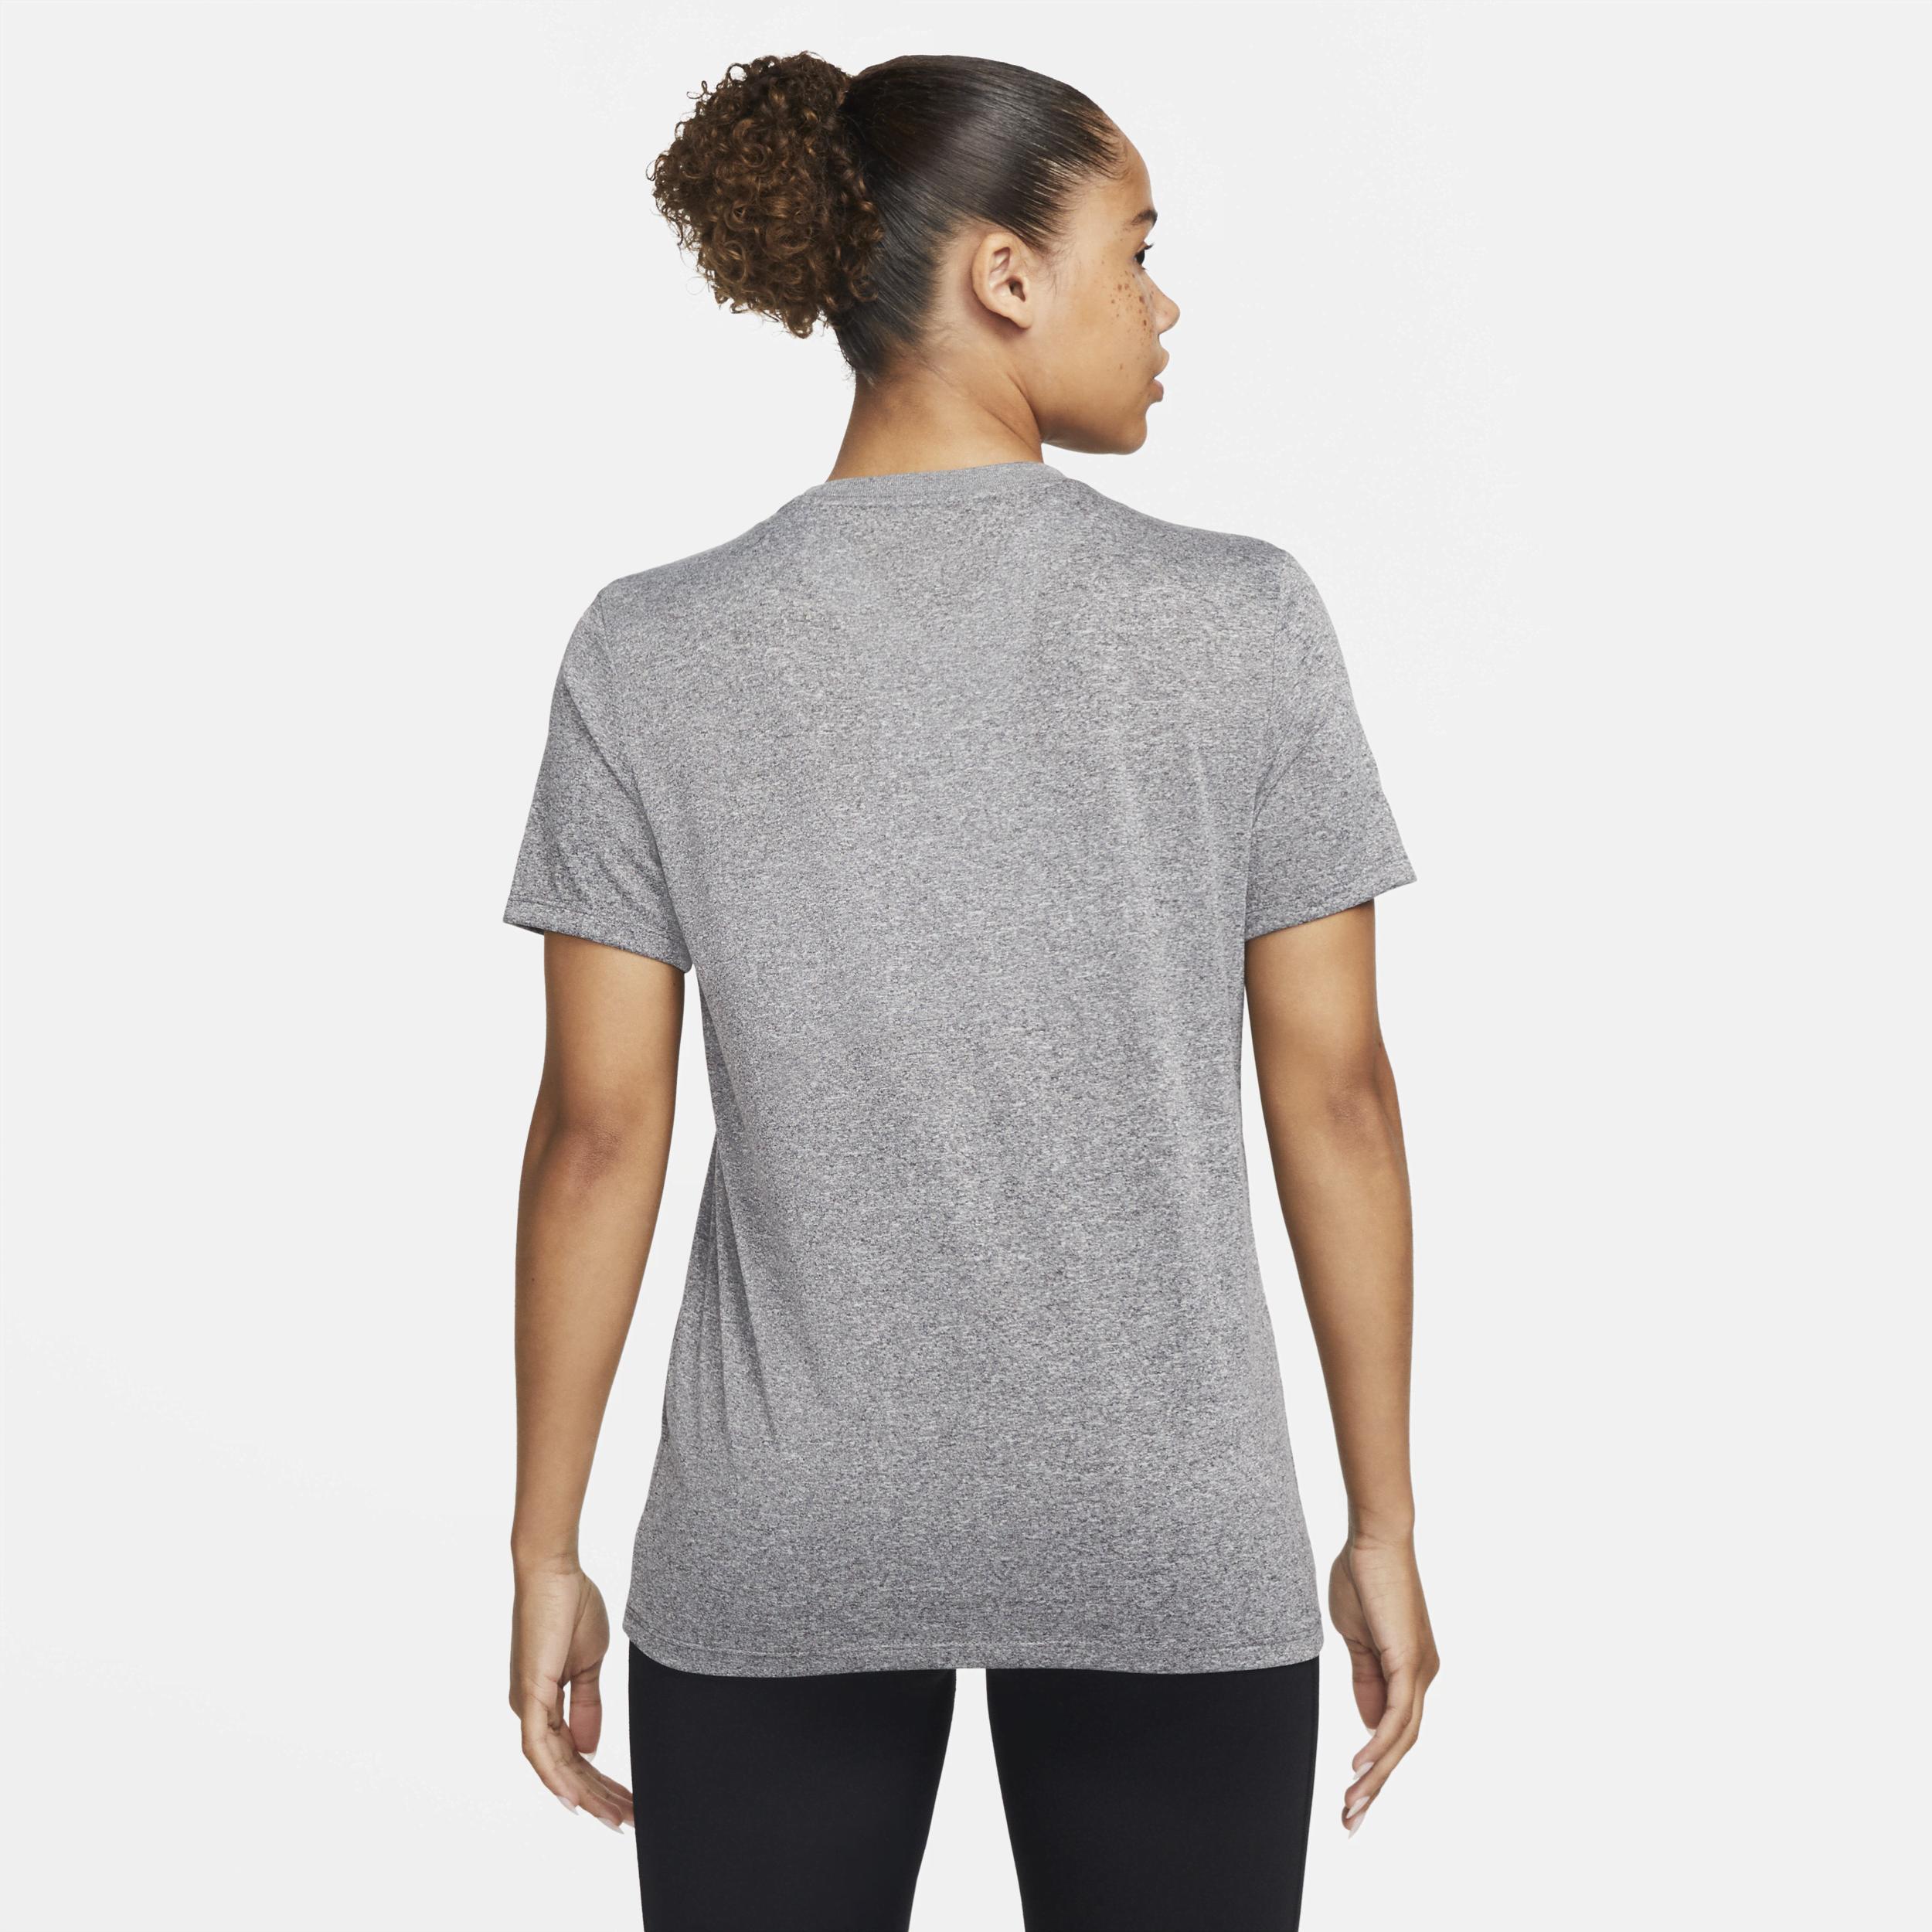 Nike Women's Dri-FIT T-Shirt Product Image